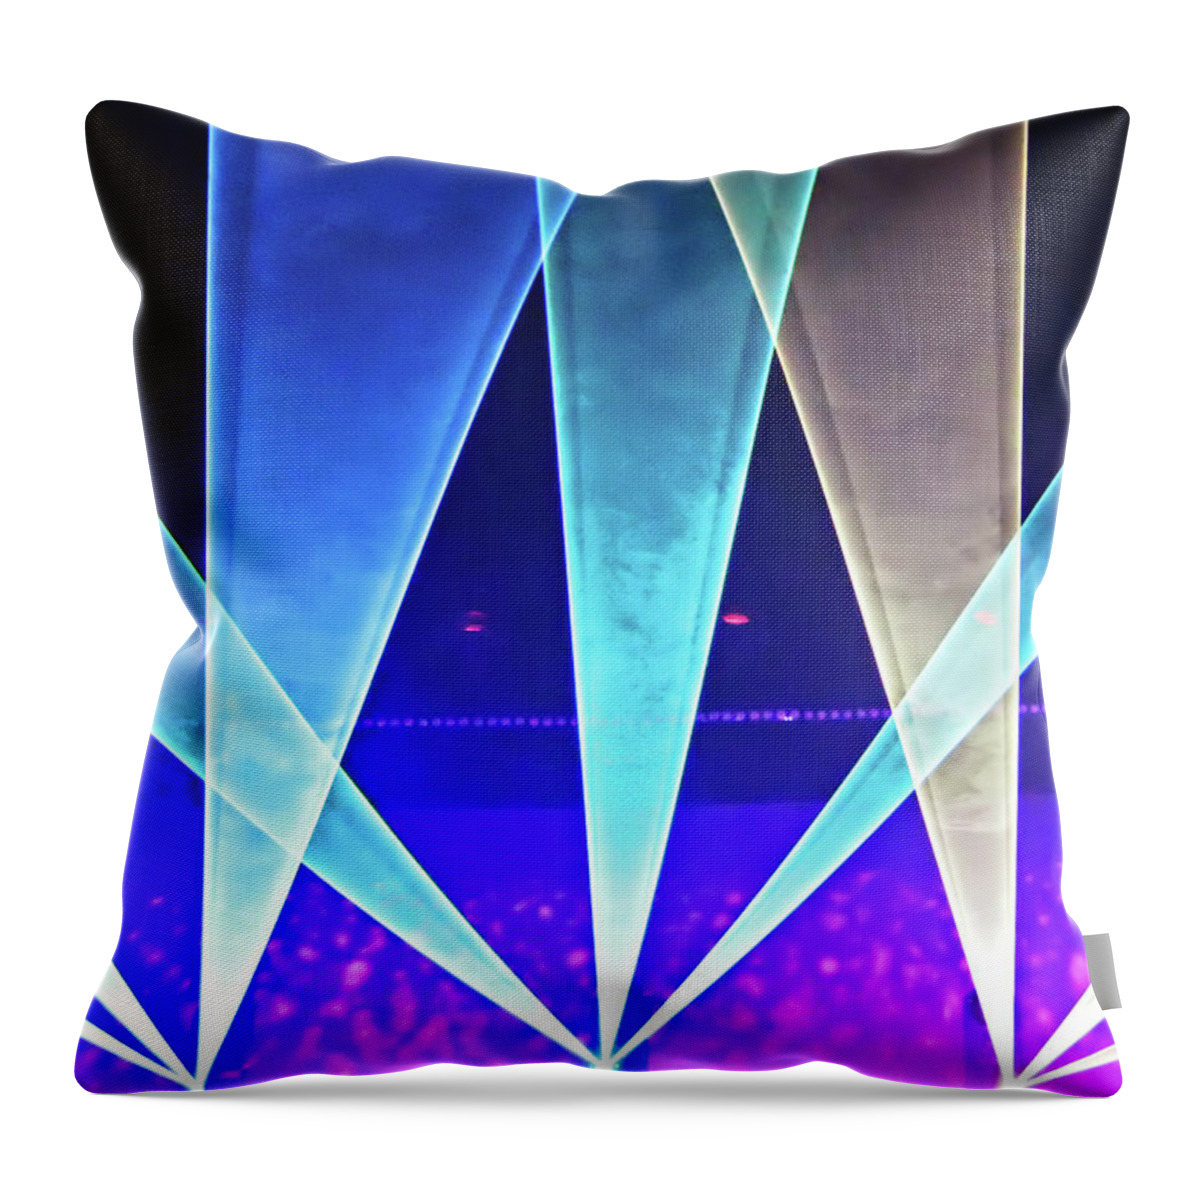 Concert Throw Pillow featuring the digital art Concert Lights by Ellen Van Bodegom